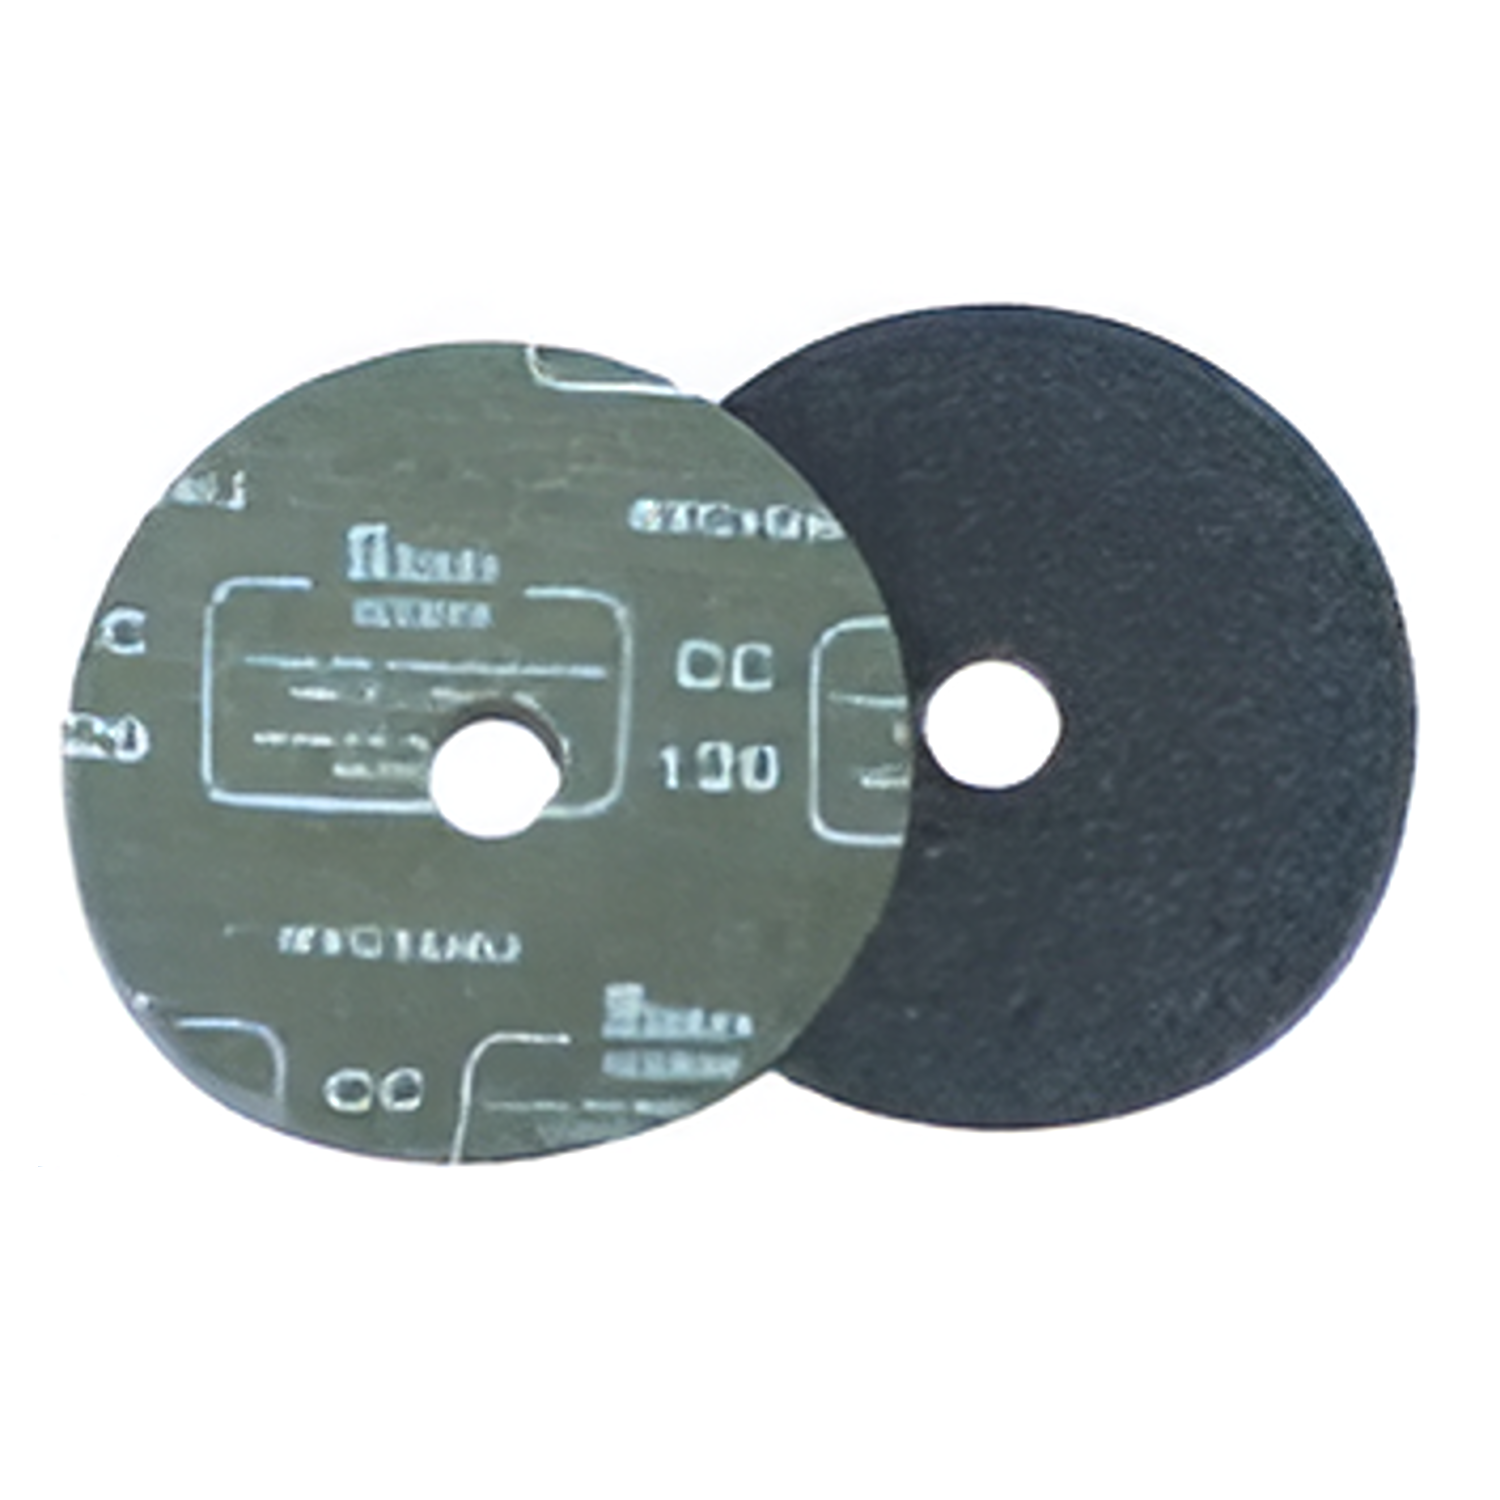 YEW AIK AA/CC Silicon Carbide Sanding Disc 4”x 5/8” - Premium Sanding Disc from YEW AIK - Shop now at Yew Aik.